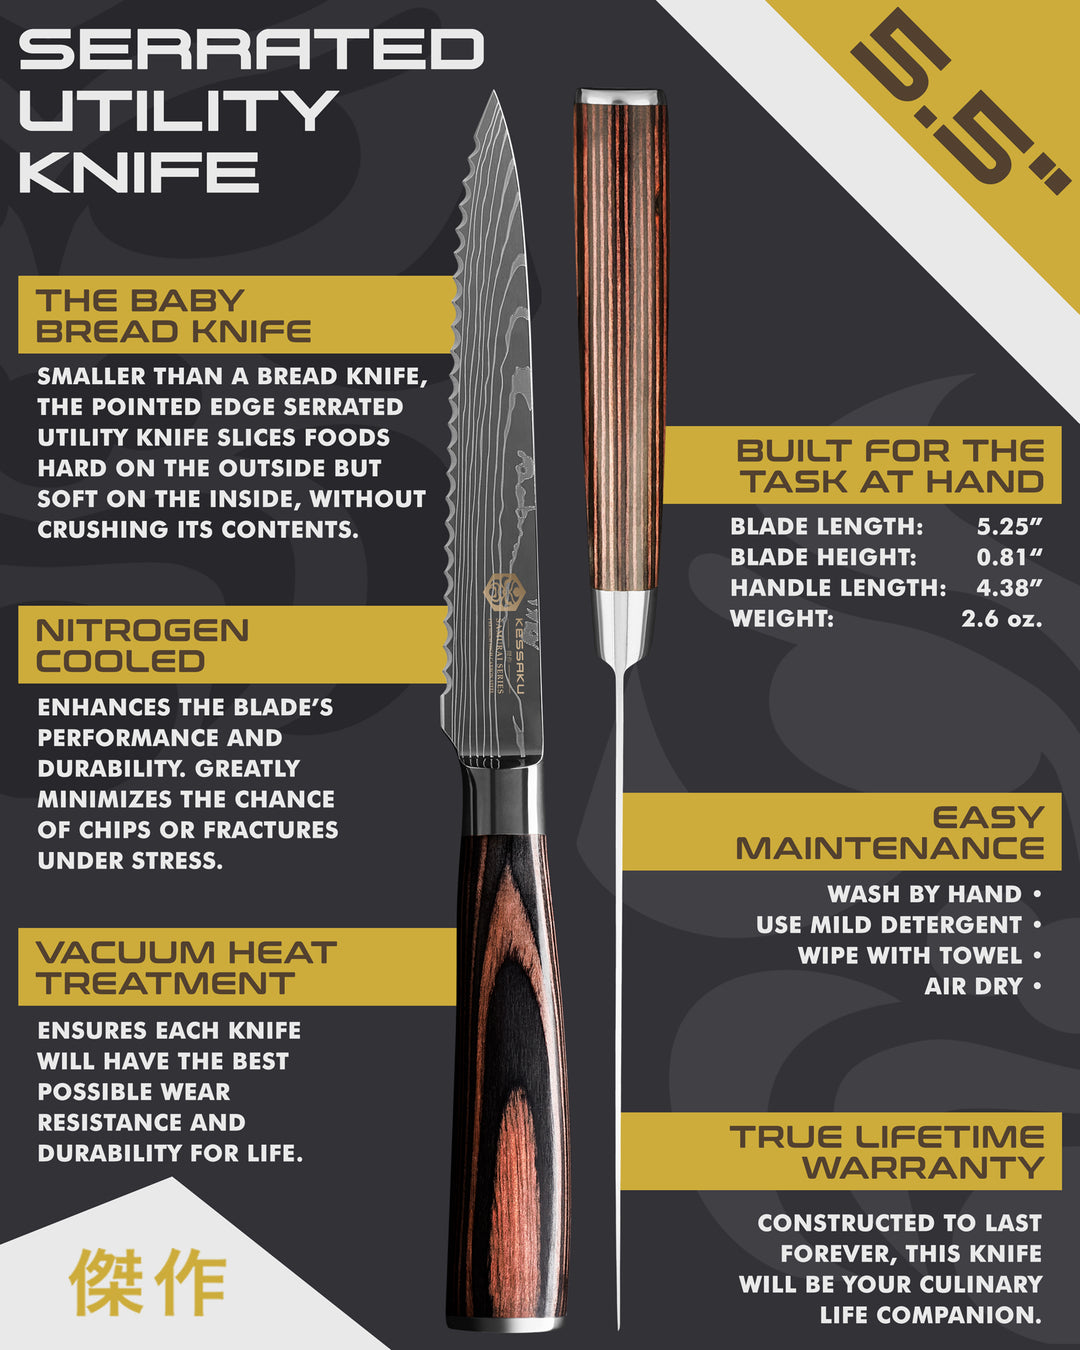 Kessaku Samurai Series Serrated Utility Knife uses, dimensions, maintenance, warranty info, and additional blade treatments